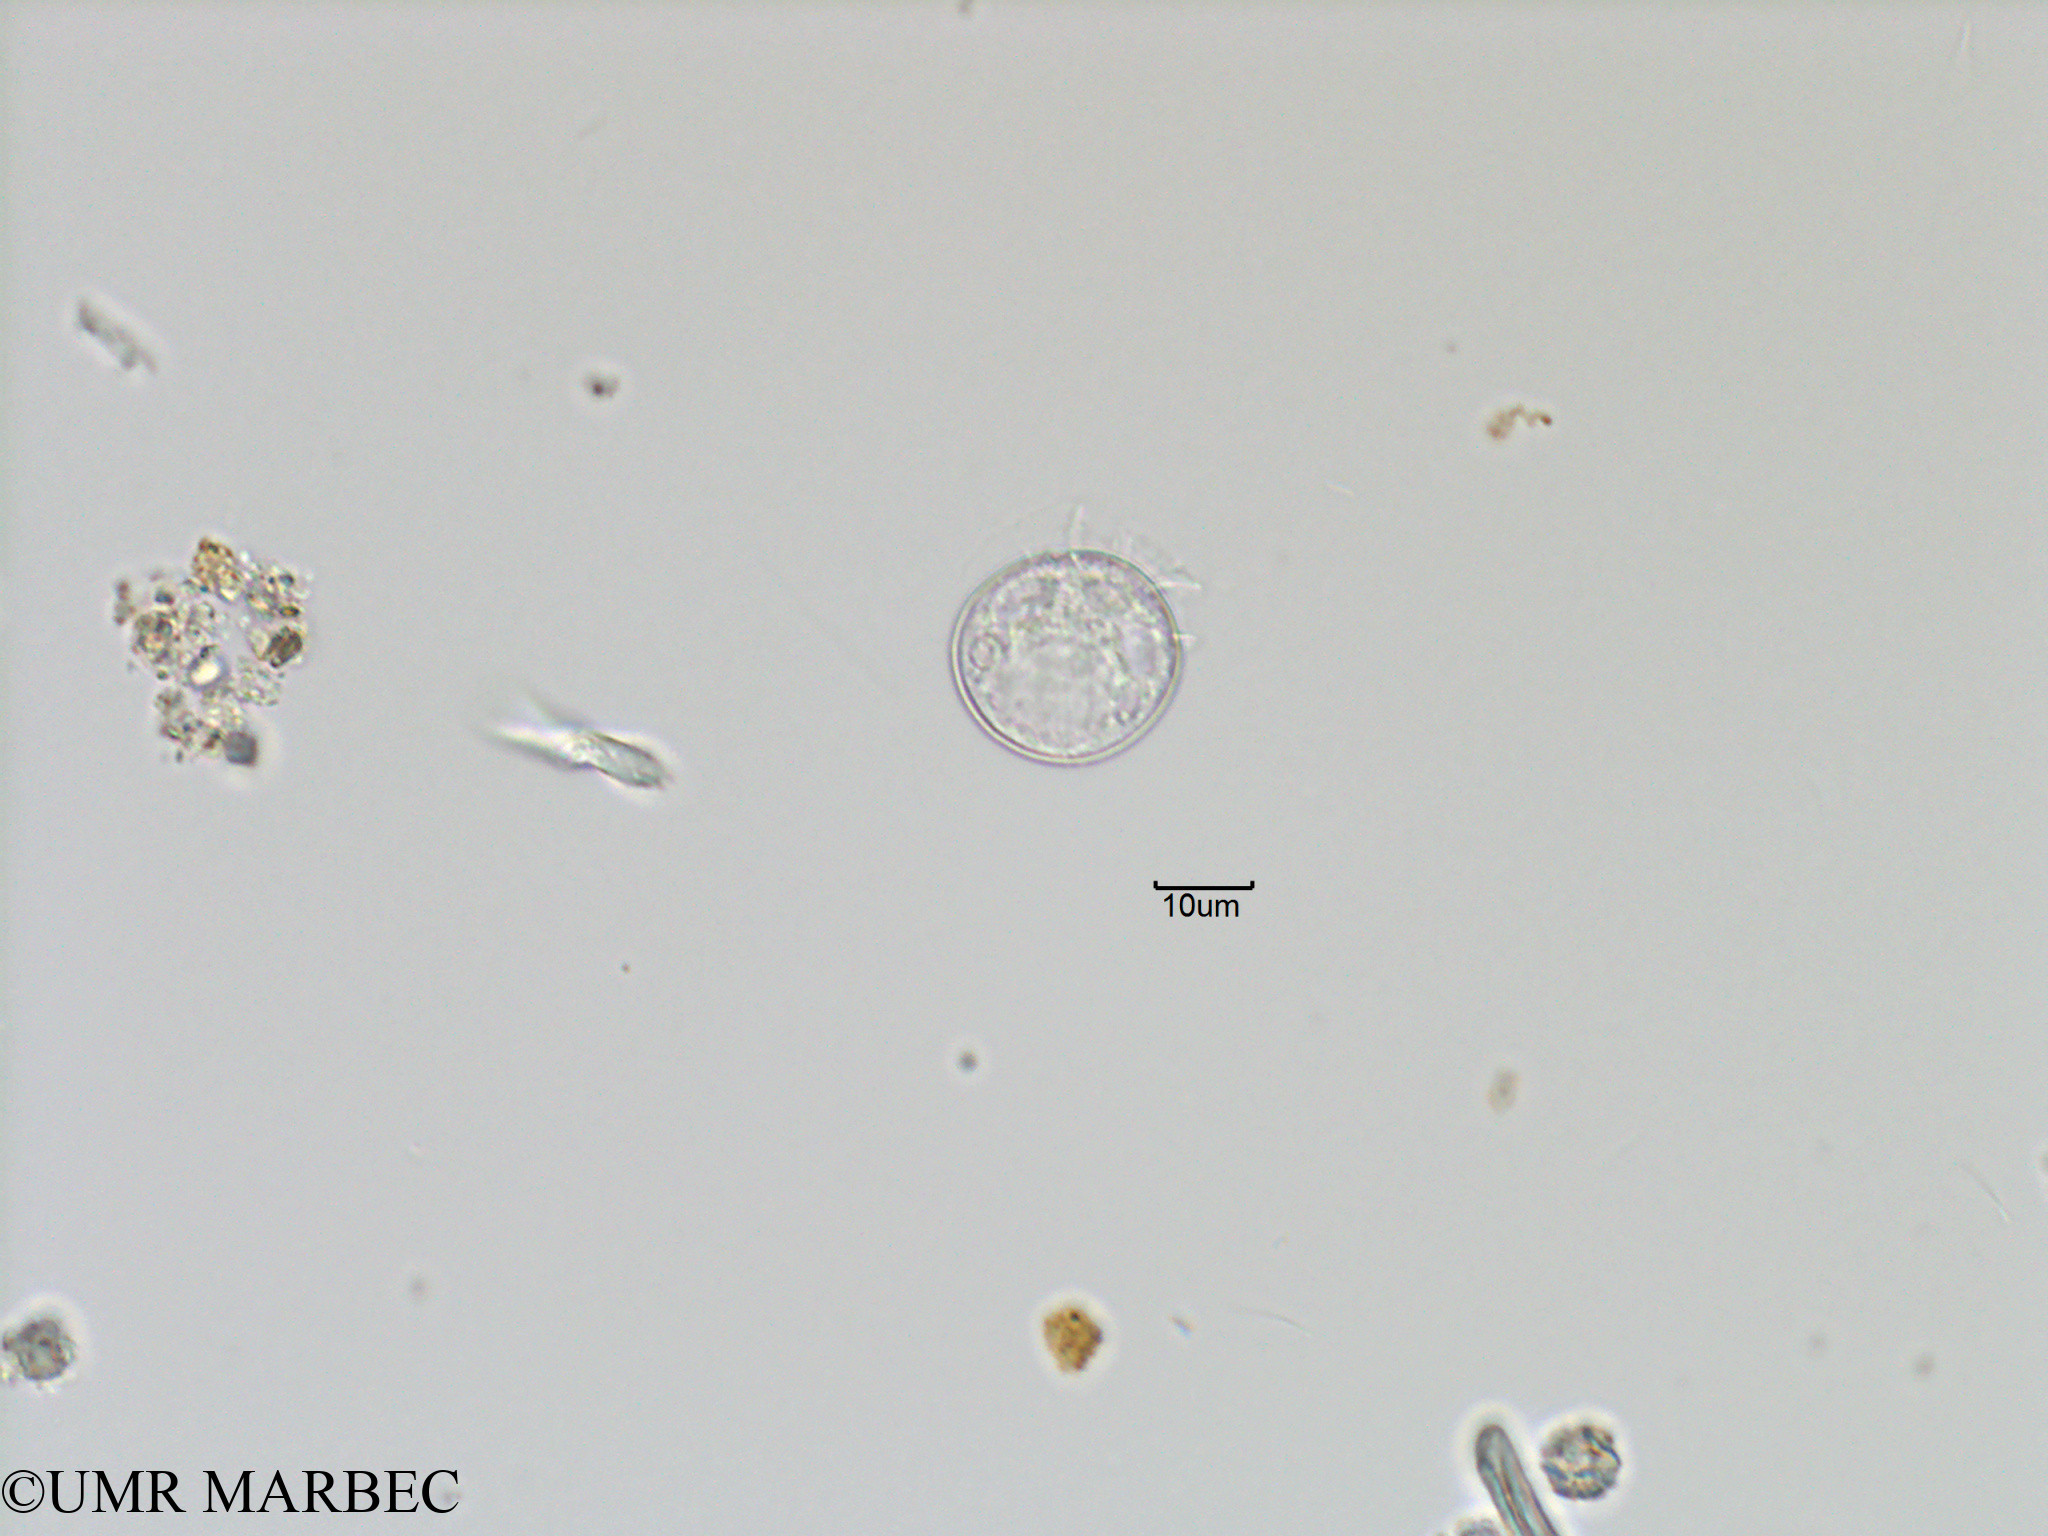 phyto/Bizerte/bizerte_bay/RISCO November 2015/Dinophysis bibulba (Baie_T5-C1-Dinophysis).tif(copy).jpg